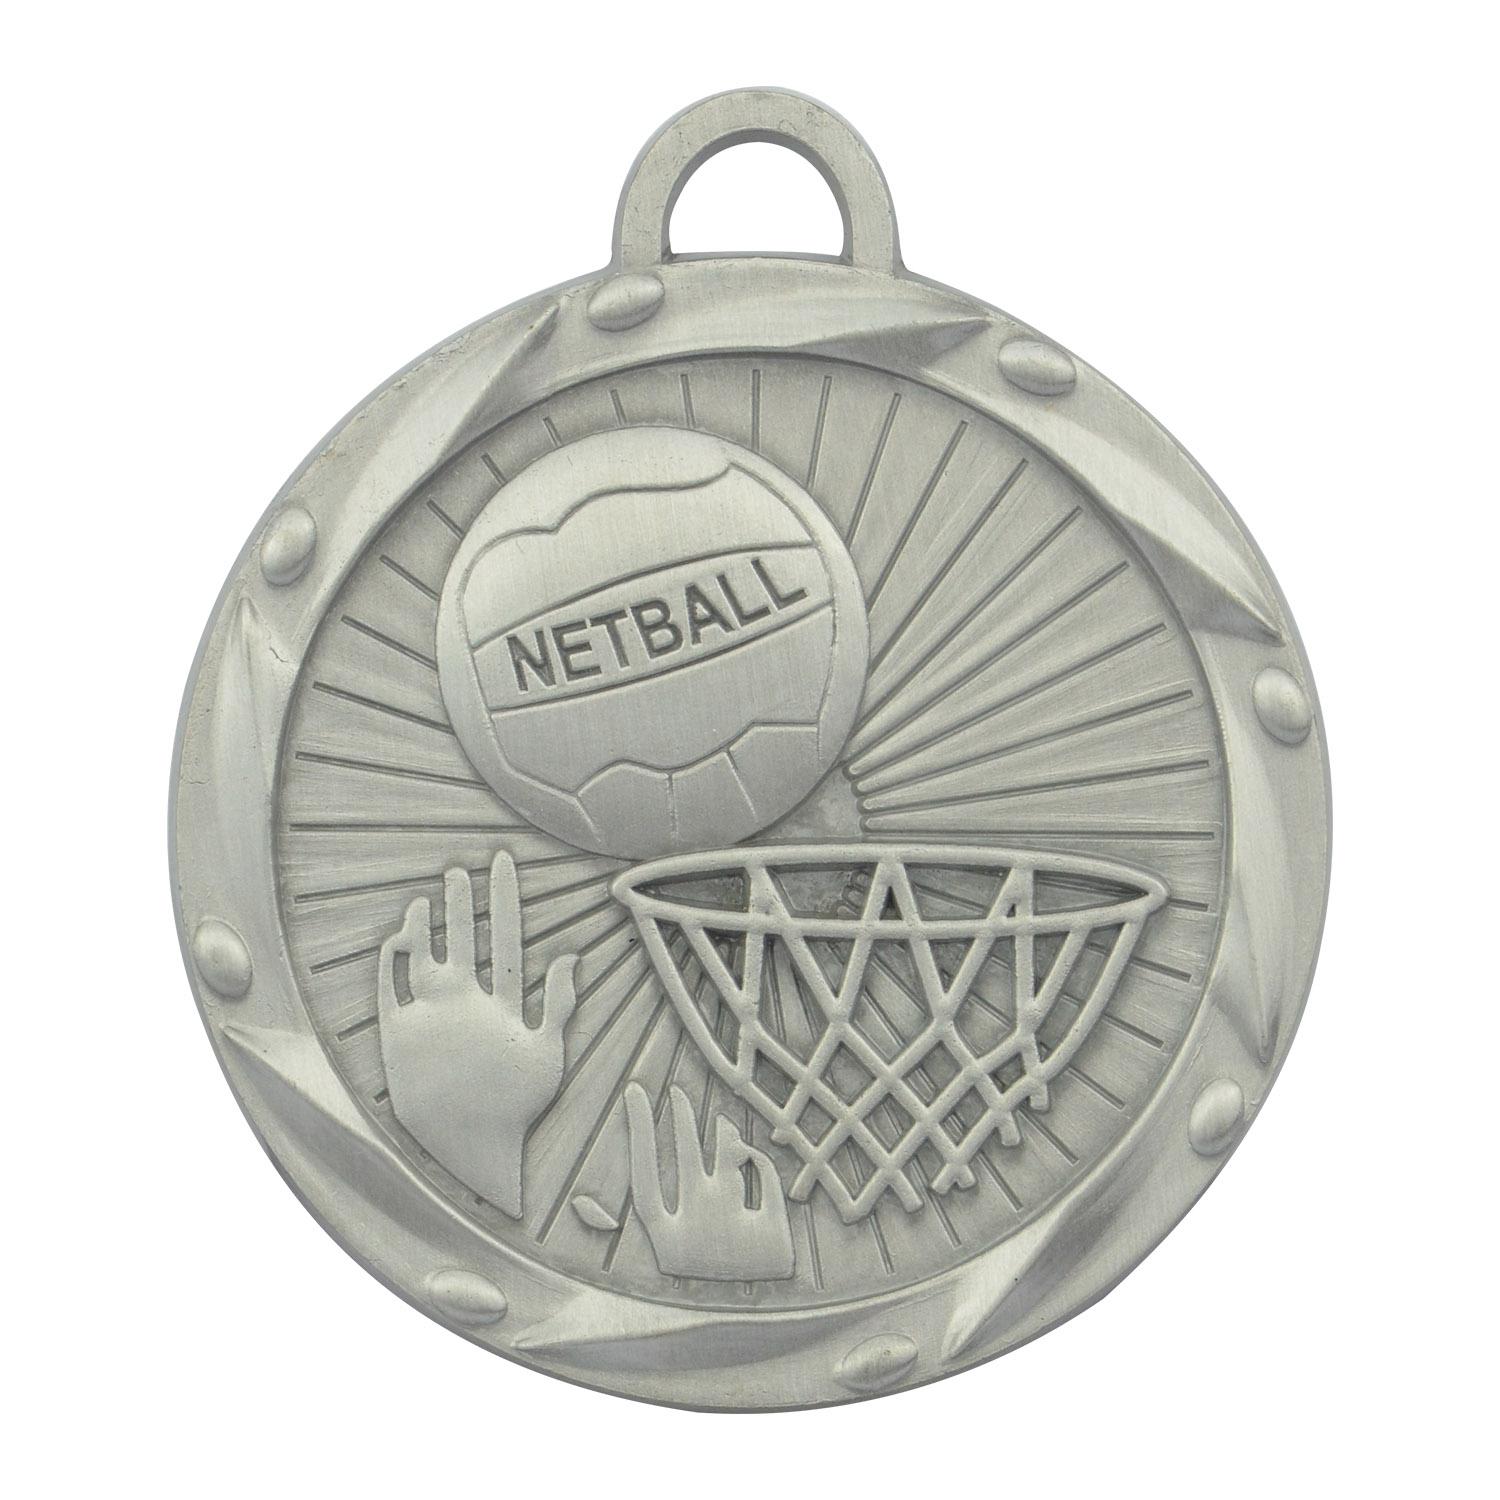 Fabryk Manufacturing Souvenir Goud Sulver Koper Metal Fuotbal Follybal Basketbal Oanpaste sportmedaljes Medaljon (1)